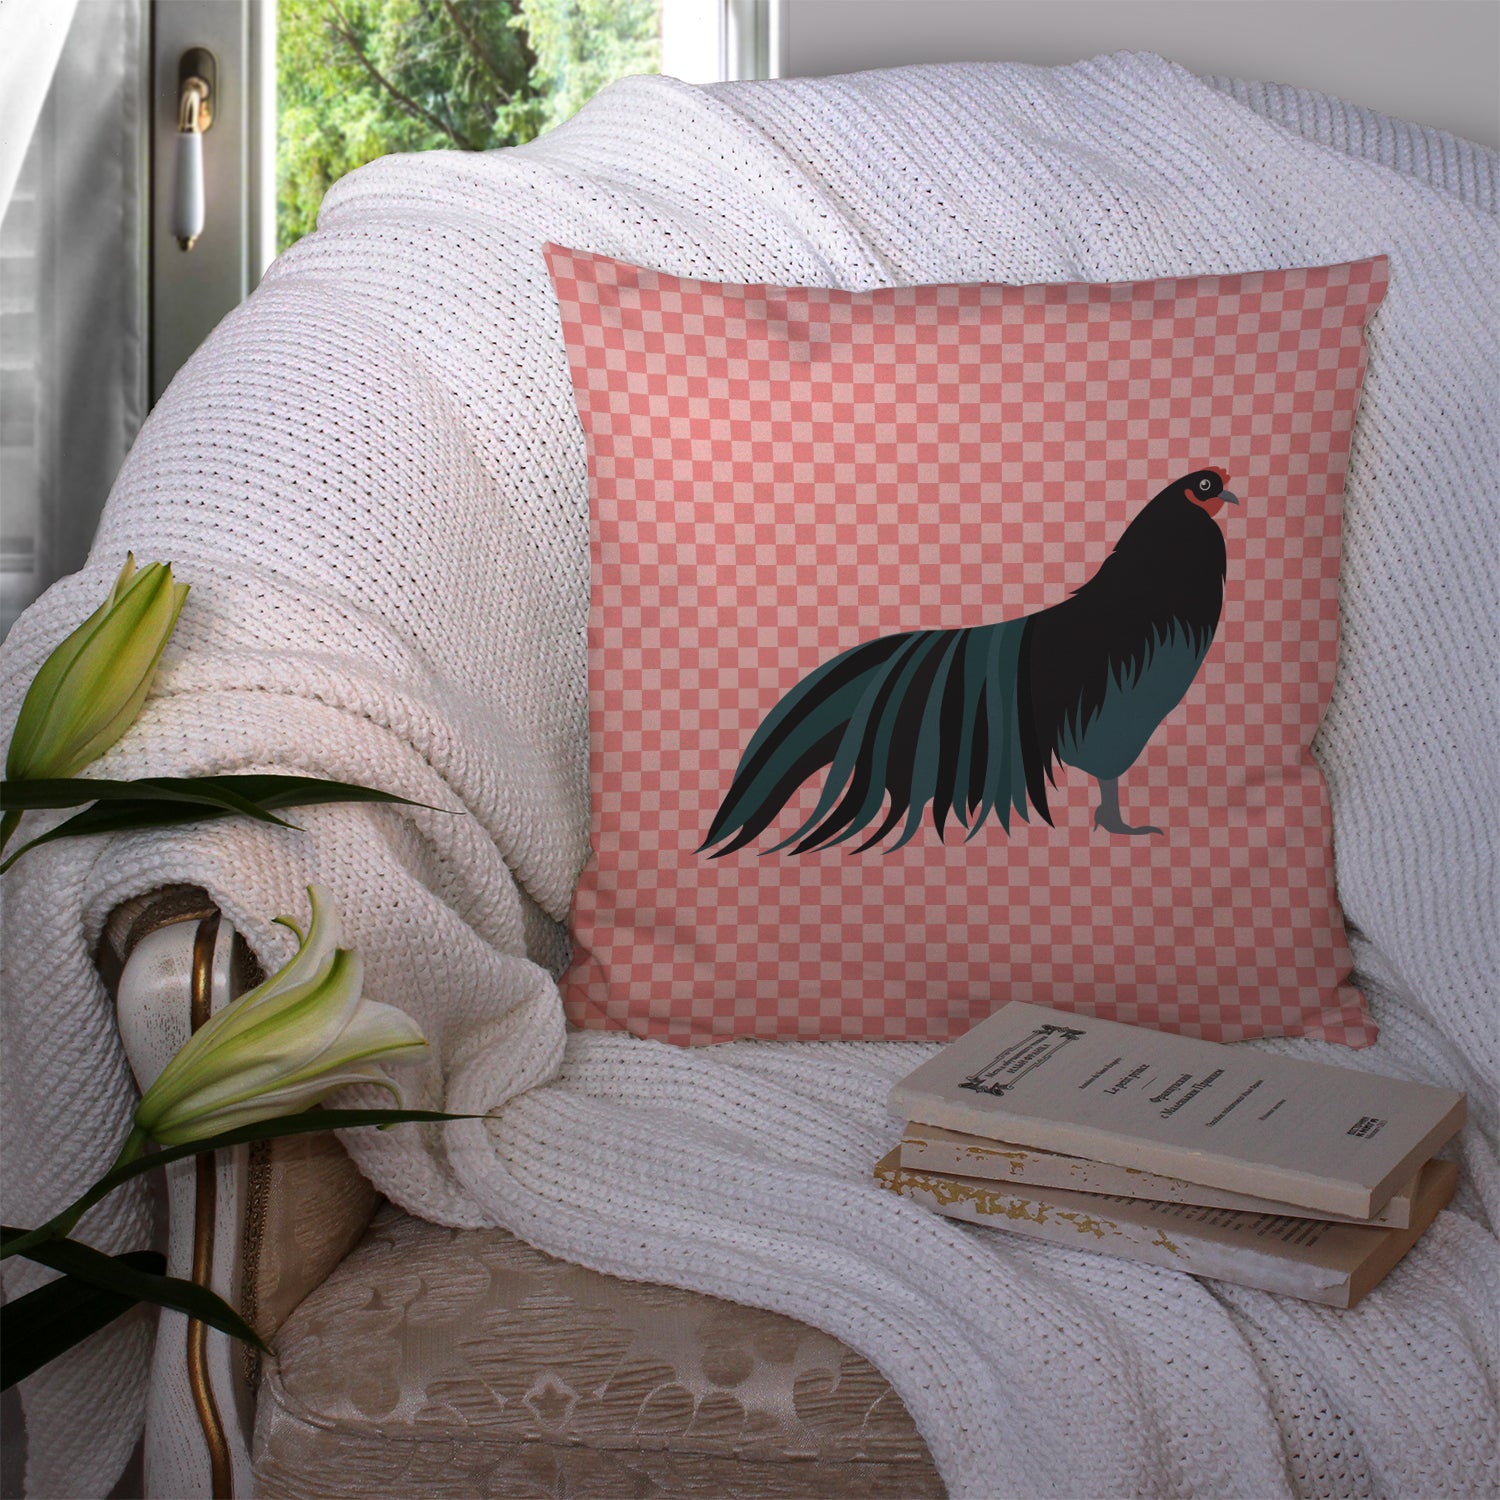 Sumatra Chicken Pink Check Fabric Decorative Pillow BB7833PW1414 - the-store.com